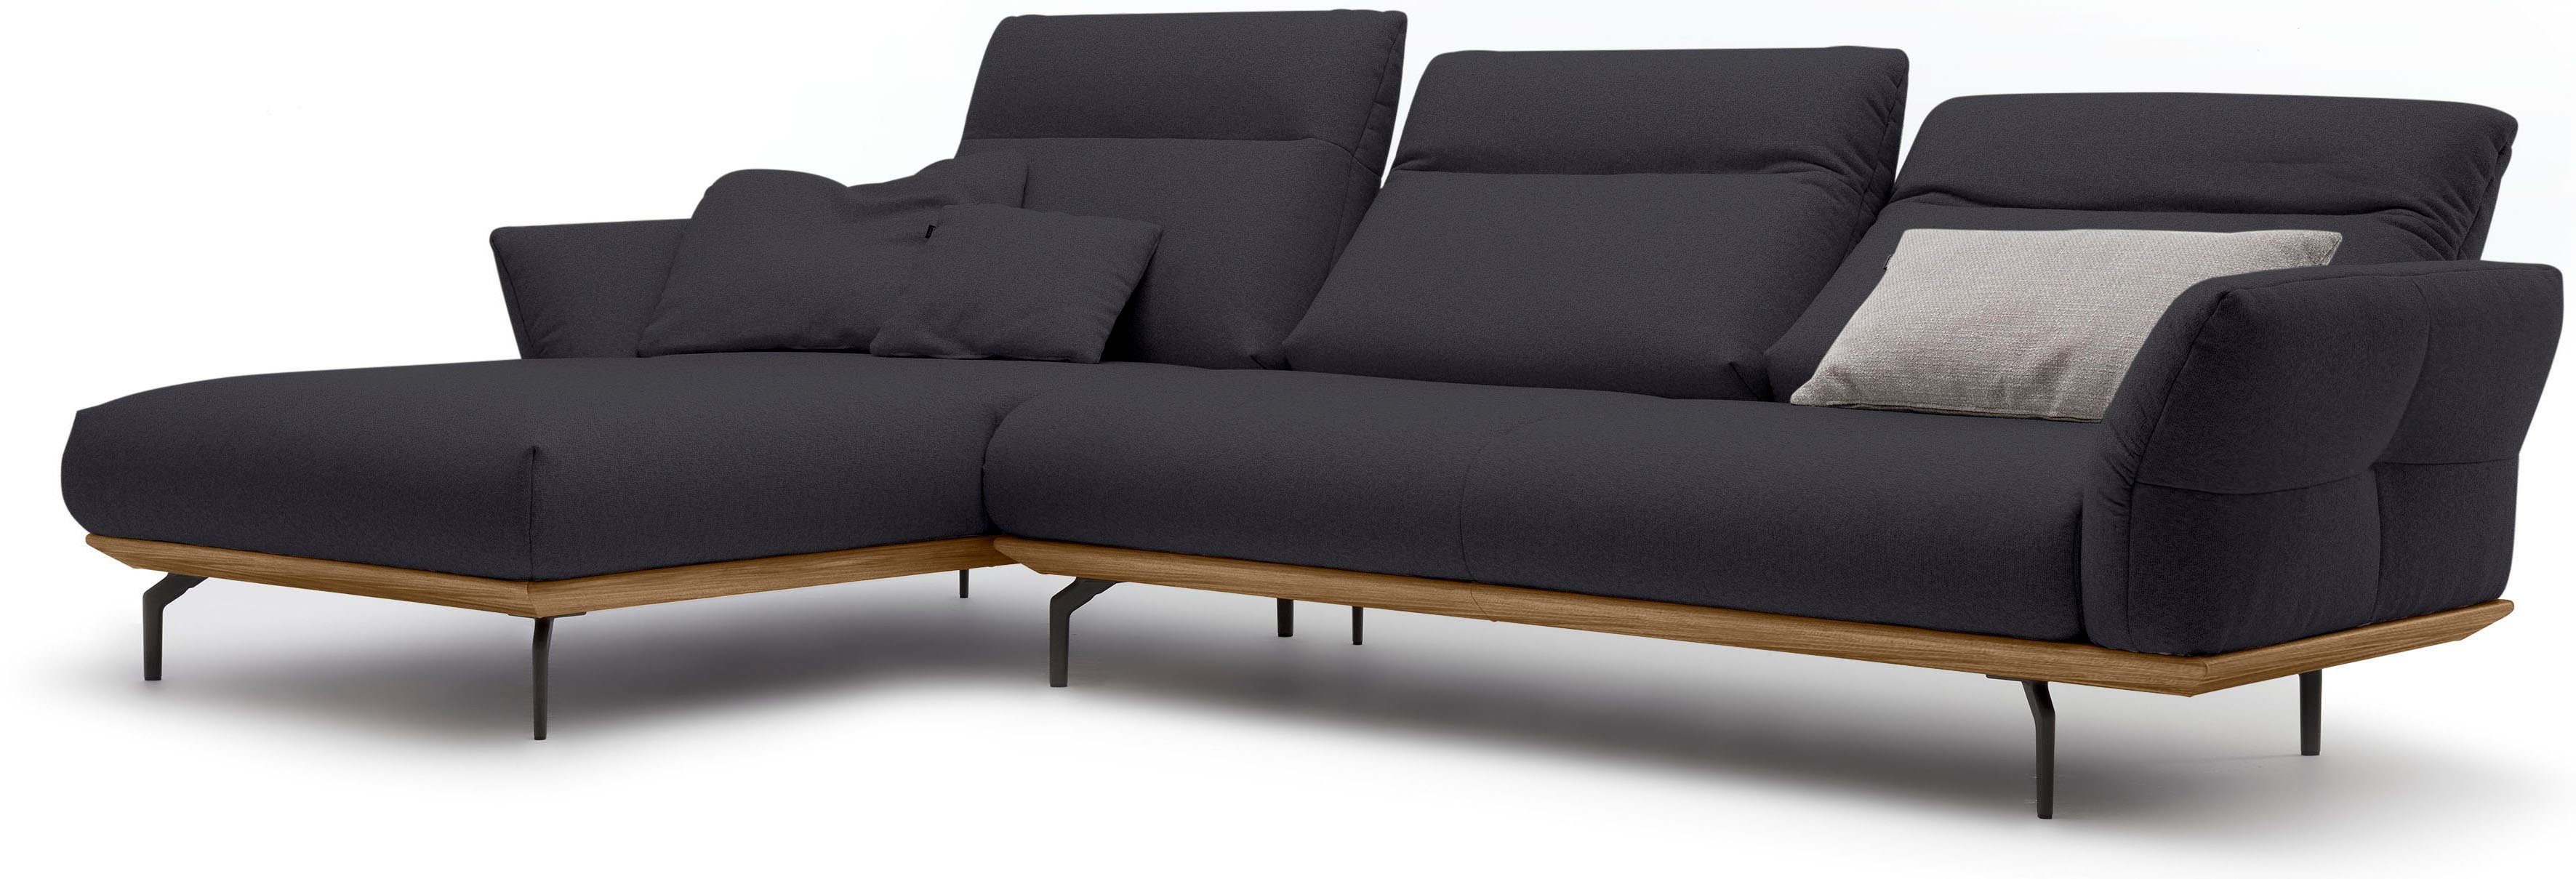 cm Ecksofa sofa in hs.460, hülsta Umbragrau, Sockel in 318 Winkelfüße Breite Nussbaum,